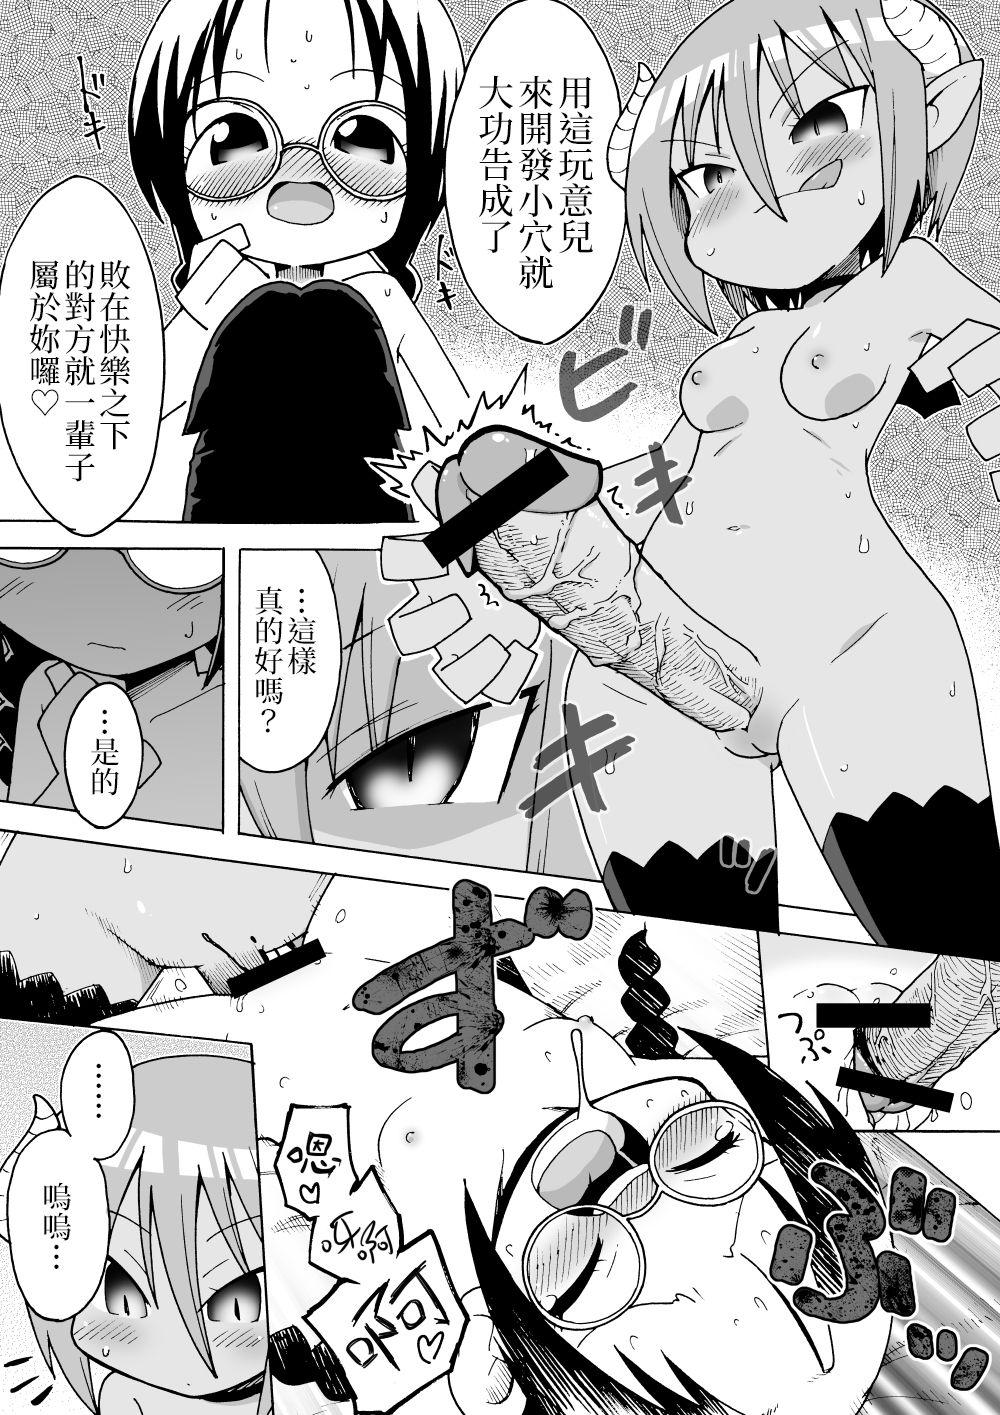 Fucks Succubus Manga | 魅魔漫畫 - Original Exotic - Page 3